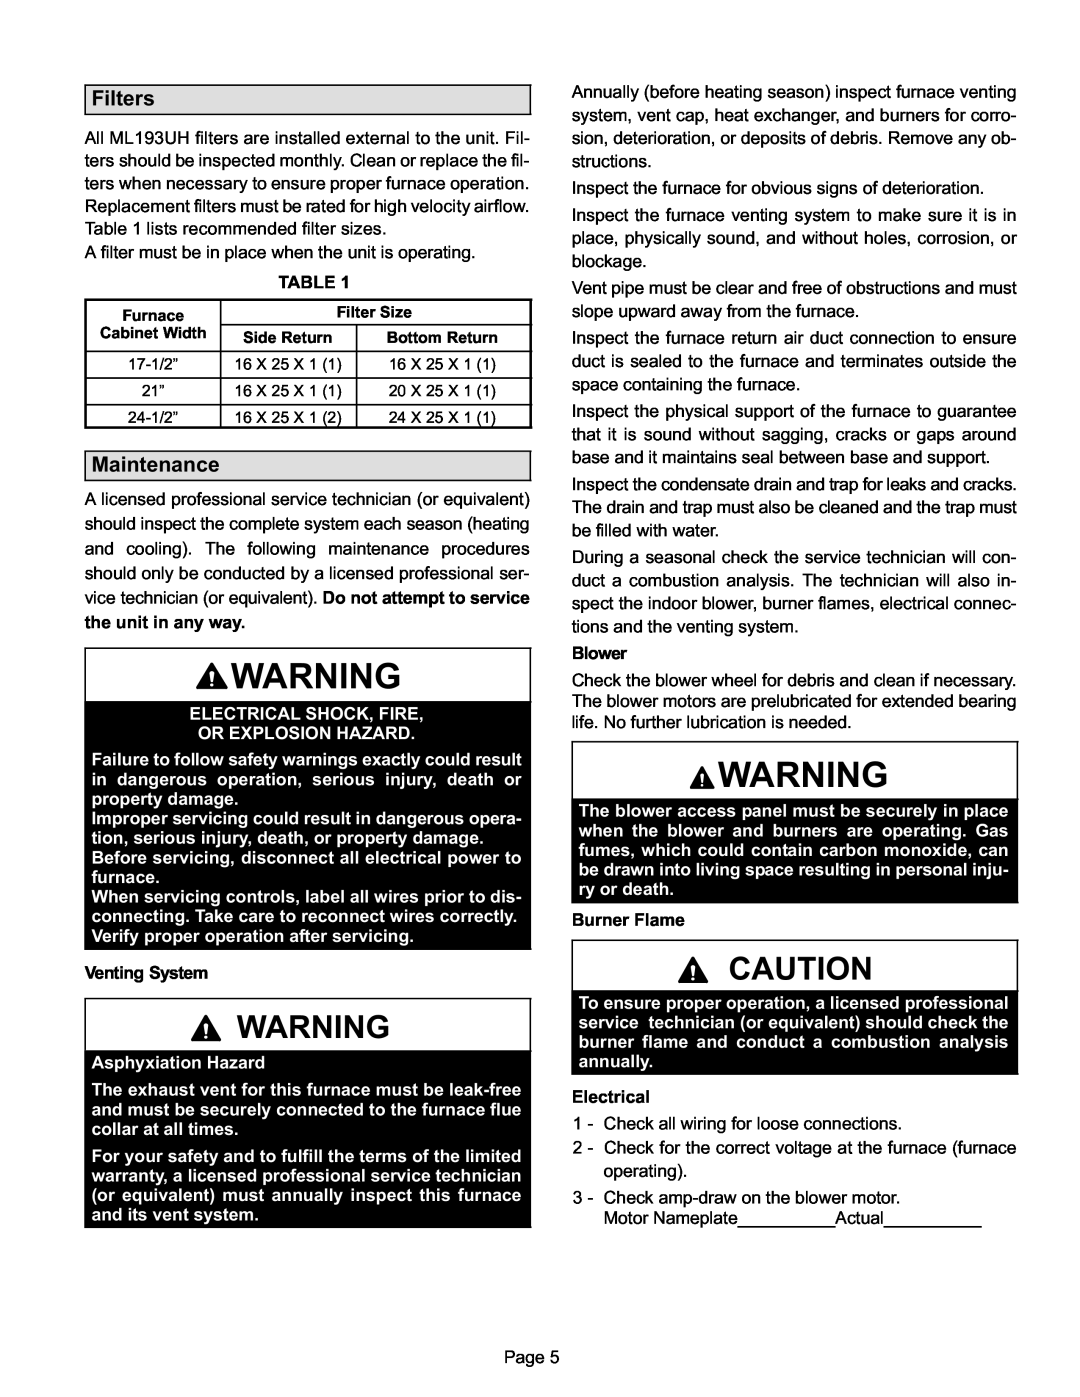 Lennox International Inc Gas Furnace manual Filters, Maintenance 